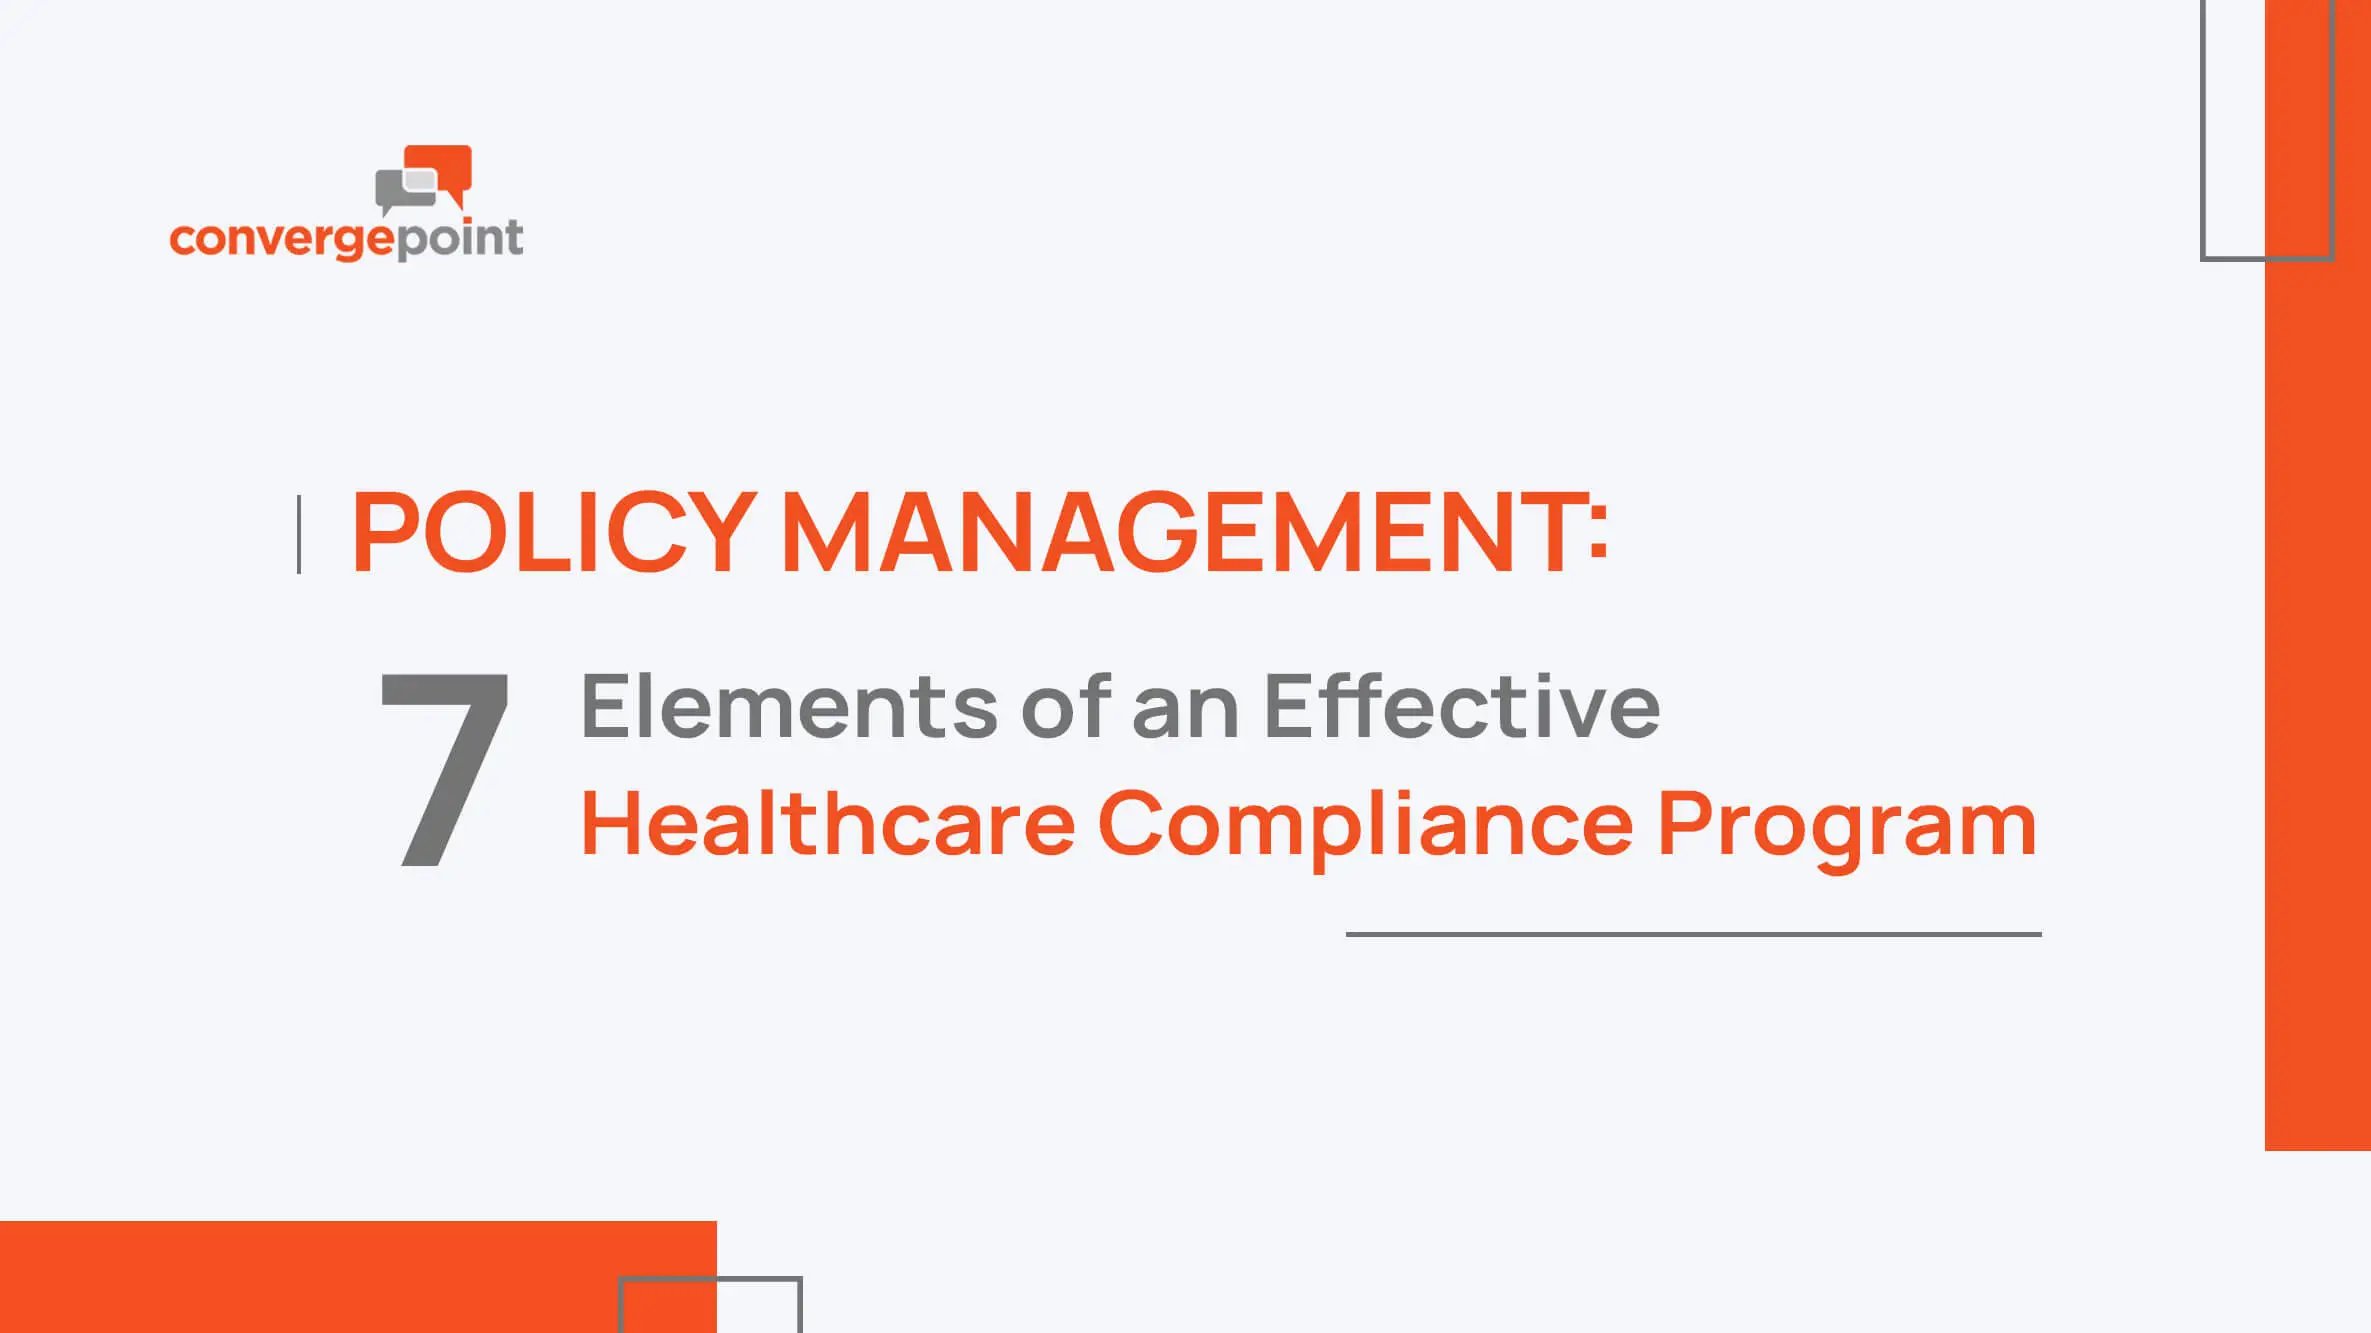 Elements of an effective healthcare compliance program